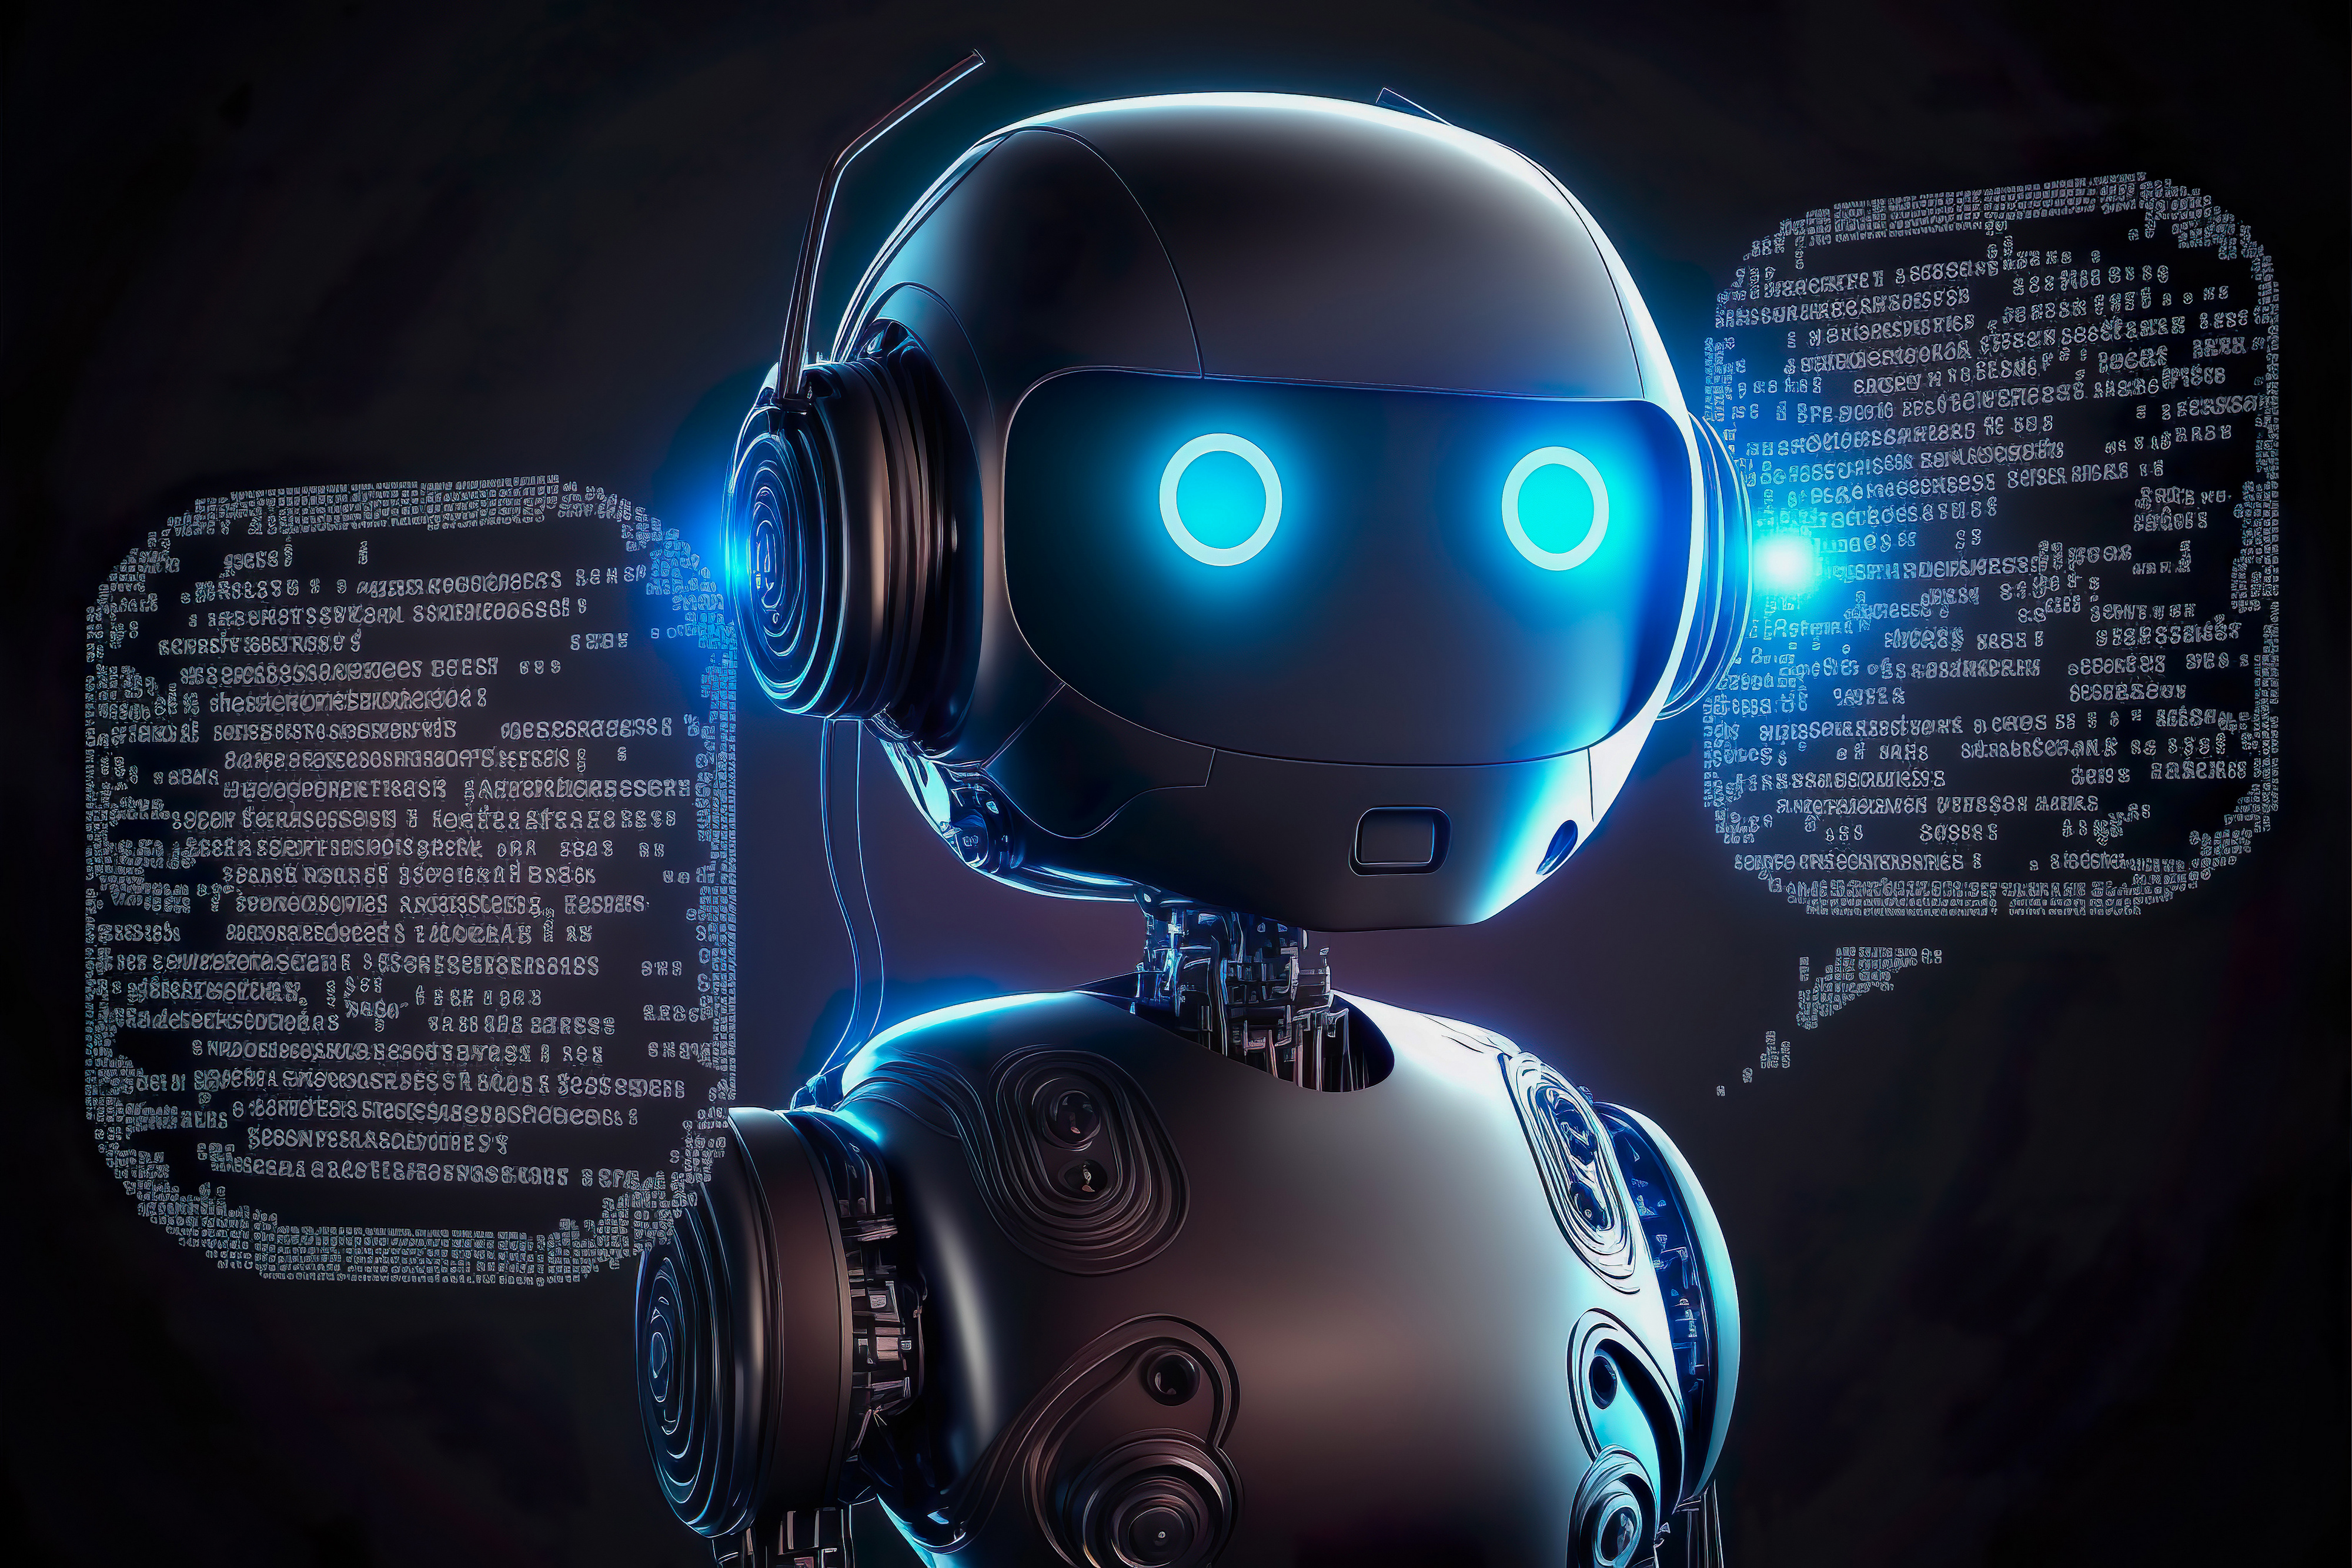 Une représentation du chatbot ChatGPT, un robot de conversation logiciel. © Atchariya, Adobe Stock